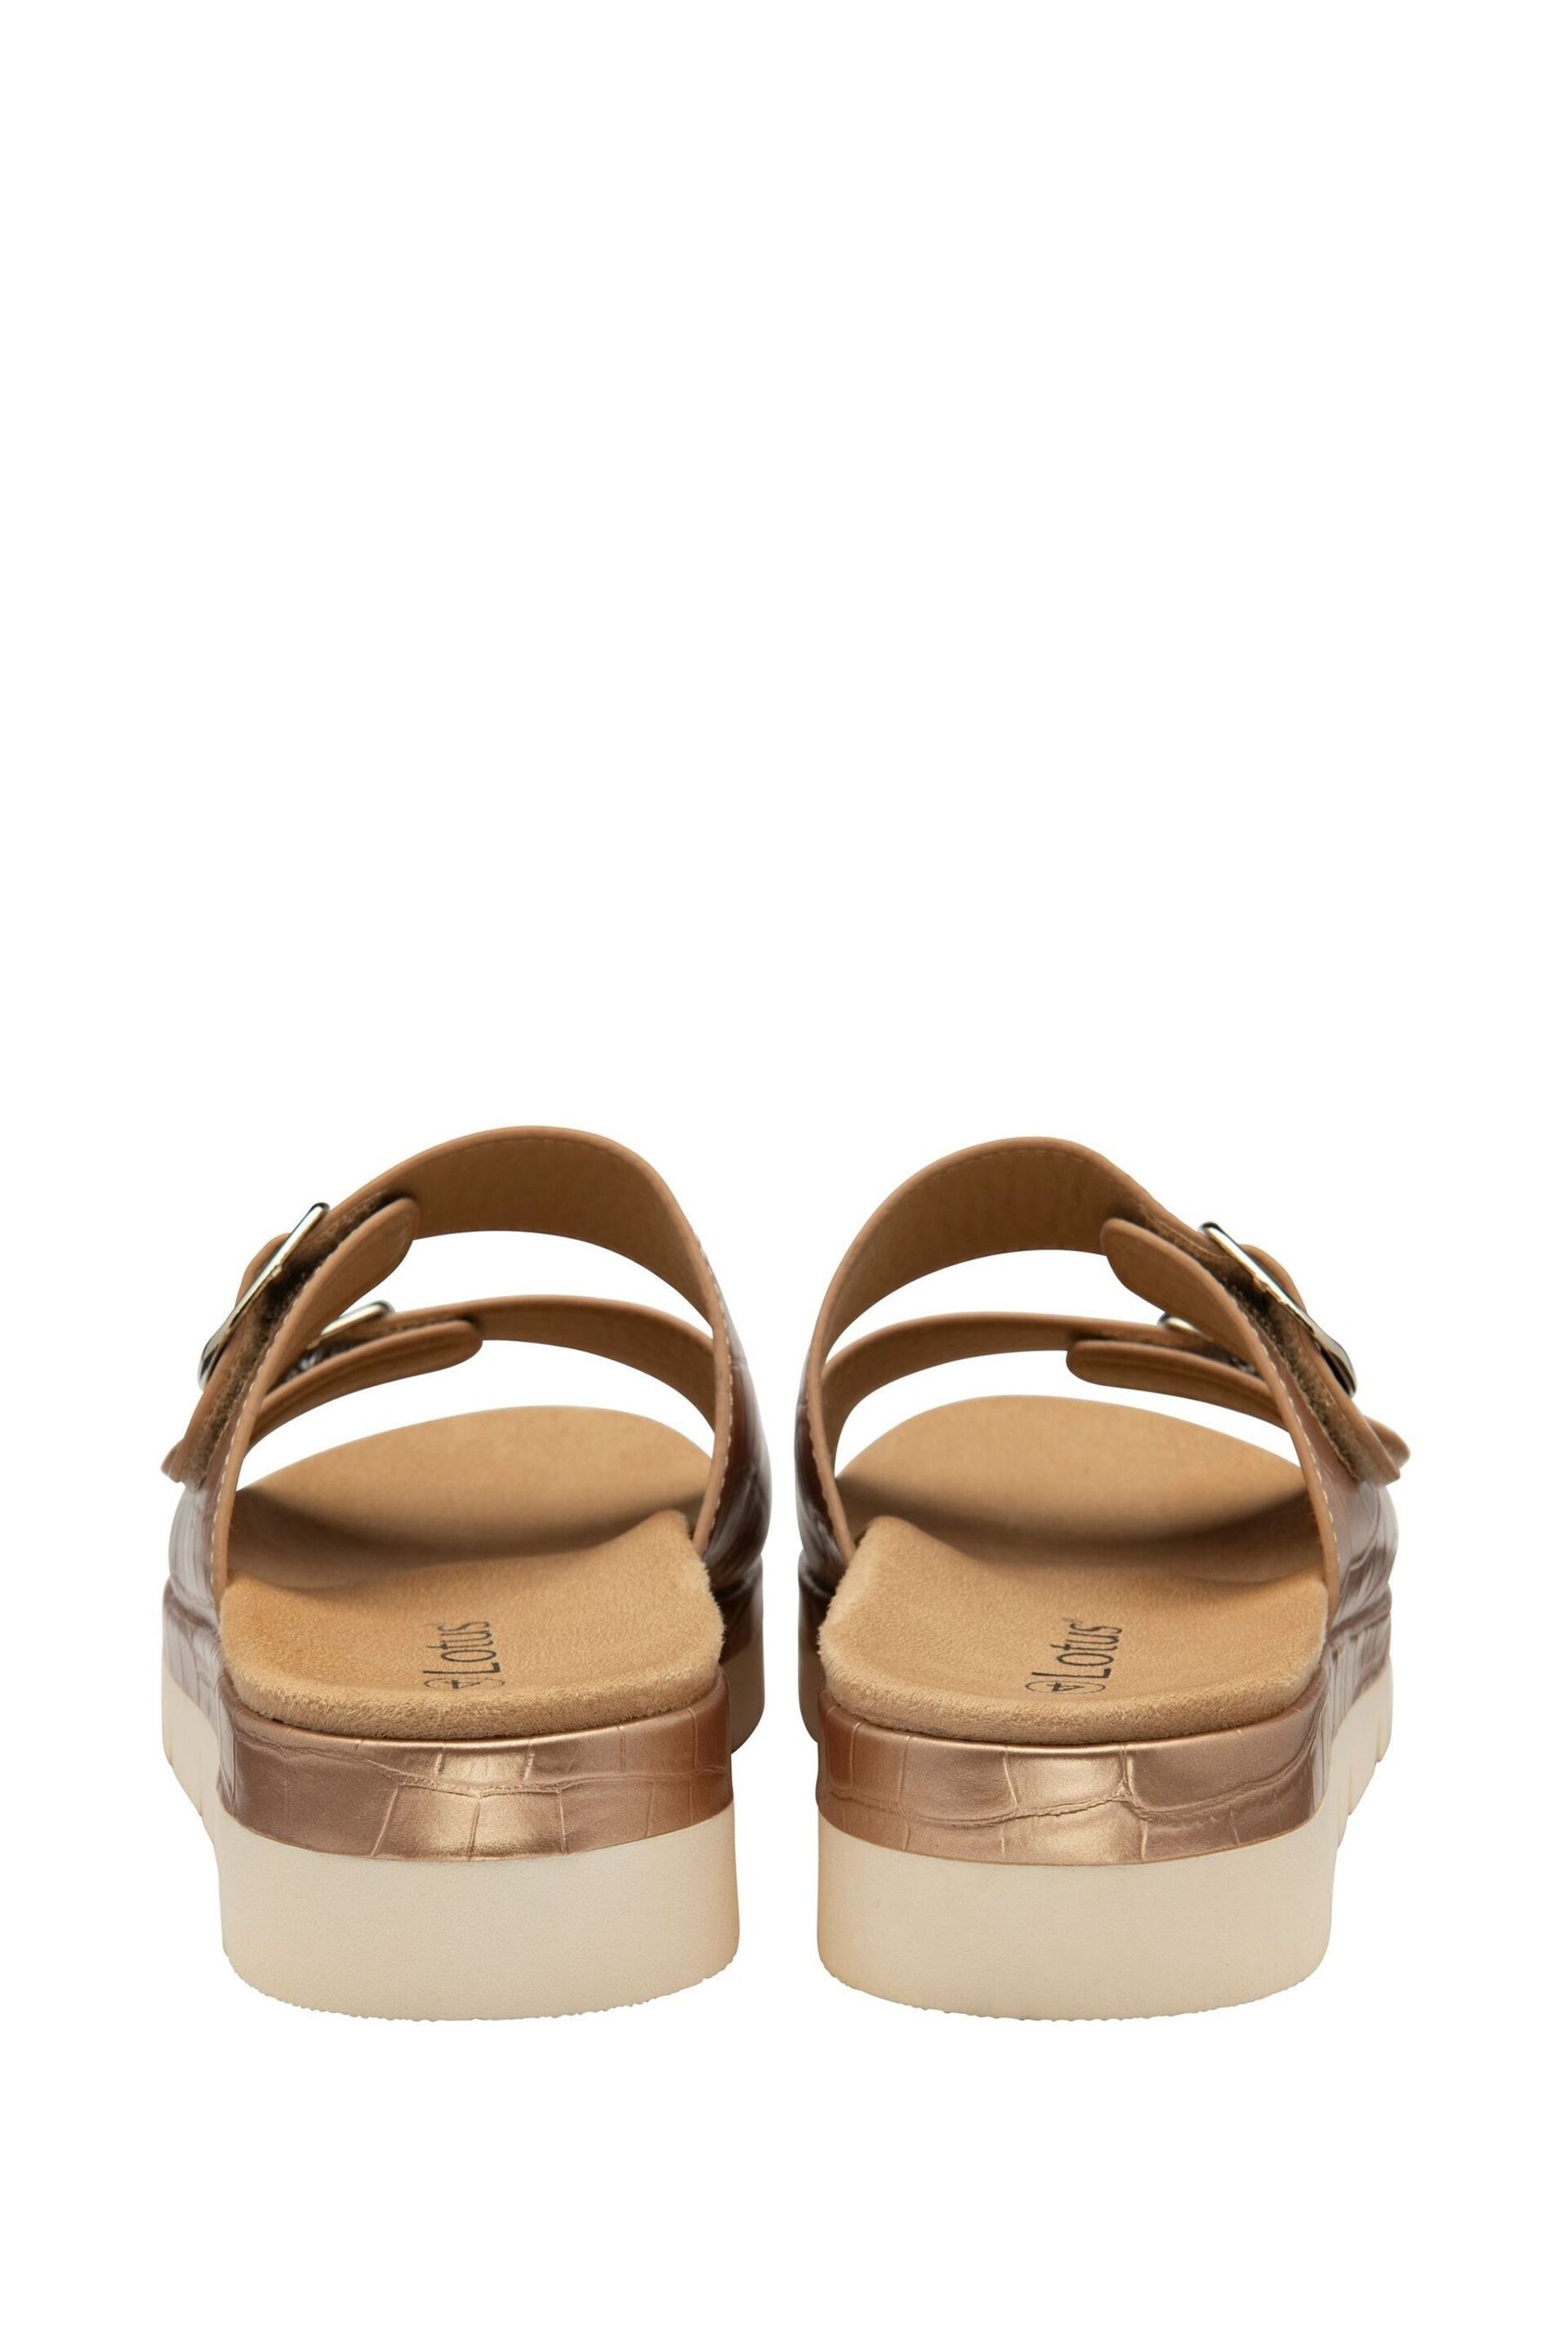 Lotus Pink Flatform Mule Sandals - Image 3 of 4